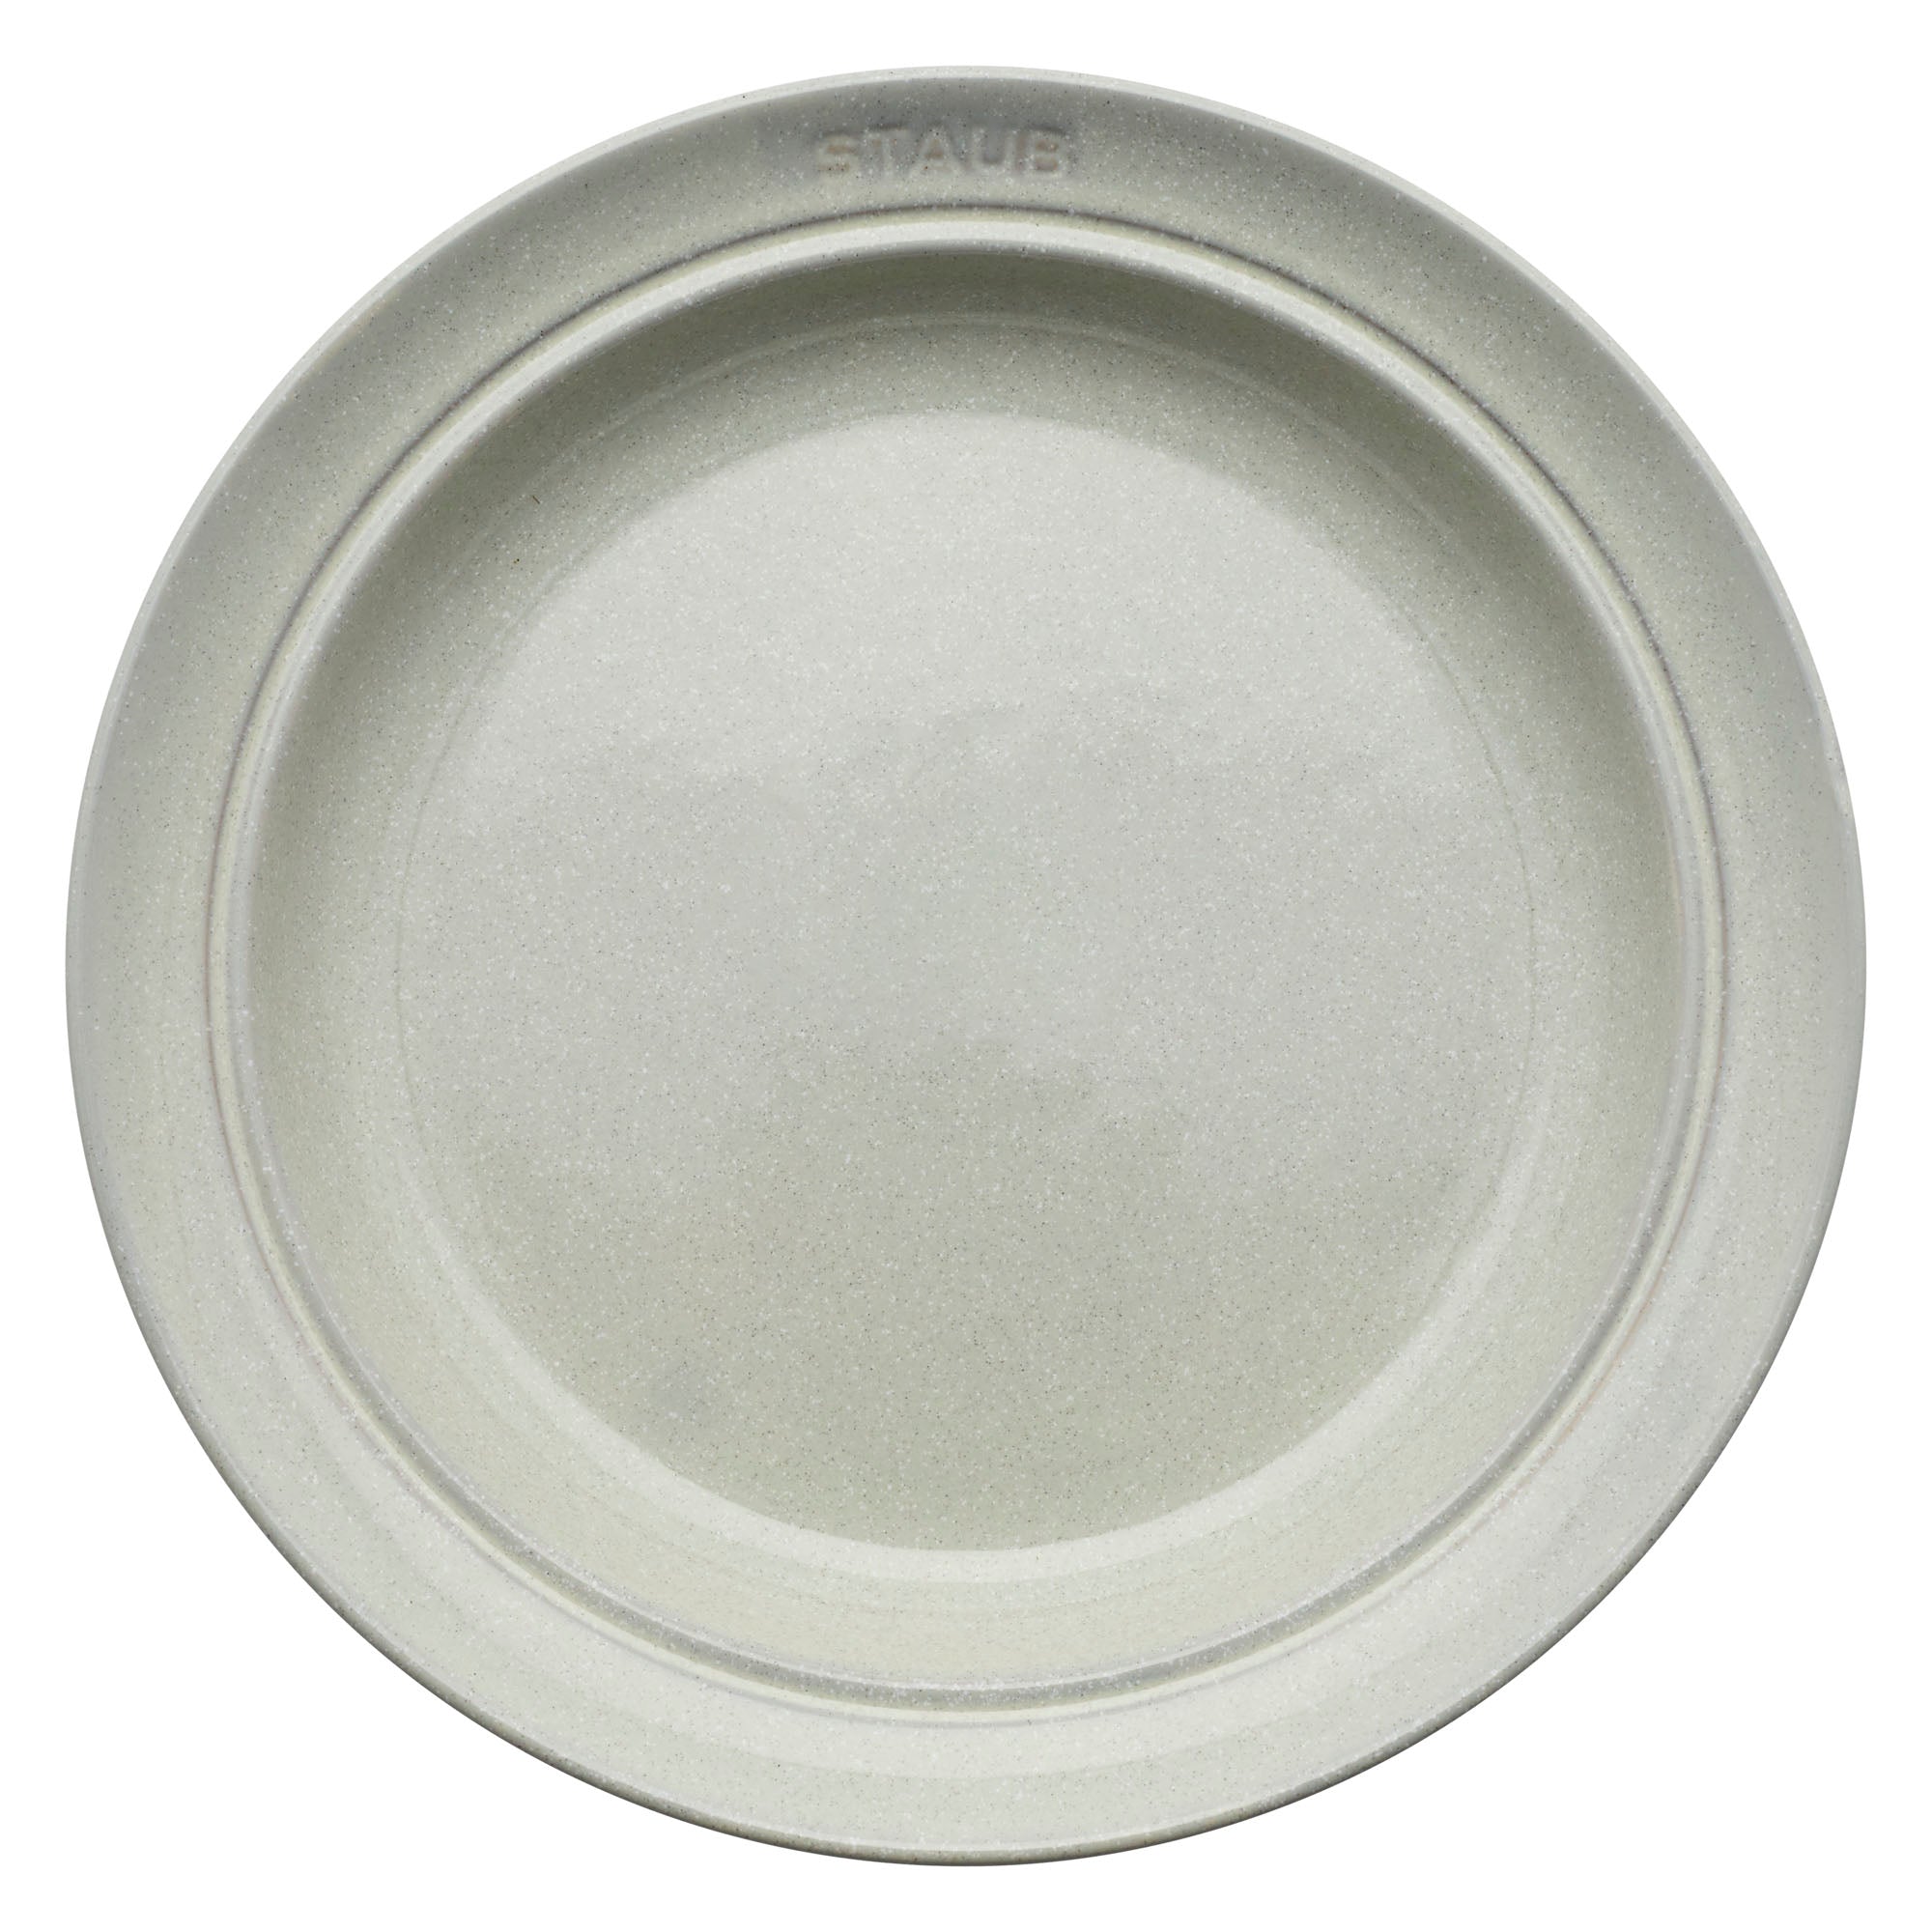 Staub Ceramic Dinnerware 4-pc 9.5-inch Soup/Pasta Bowl Set